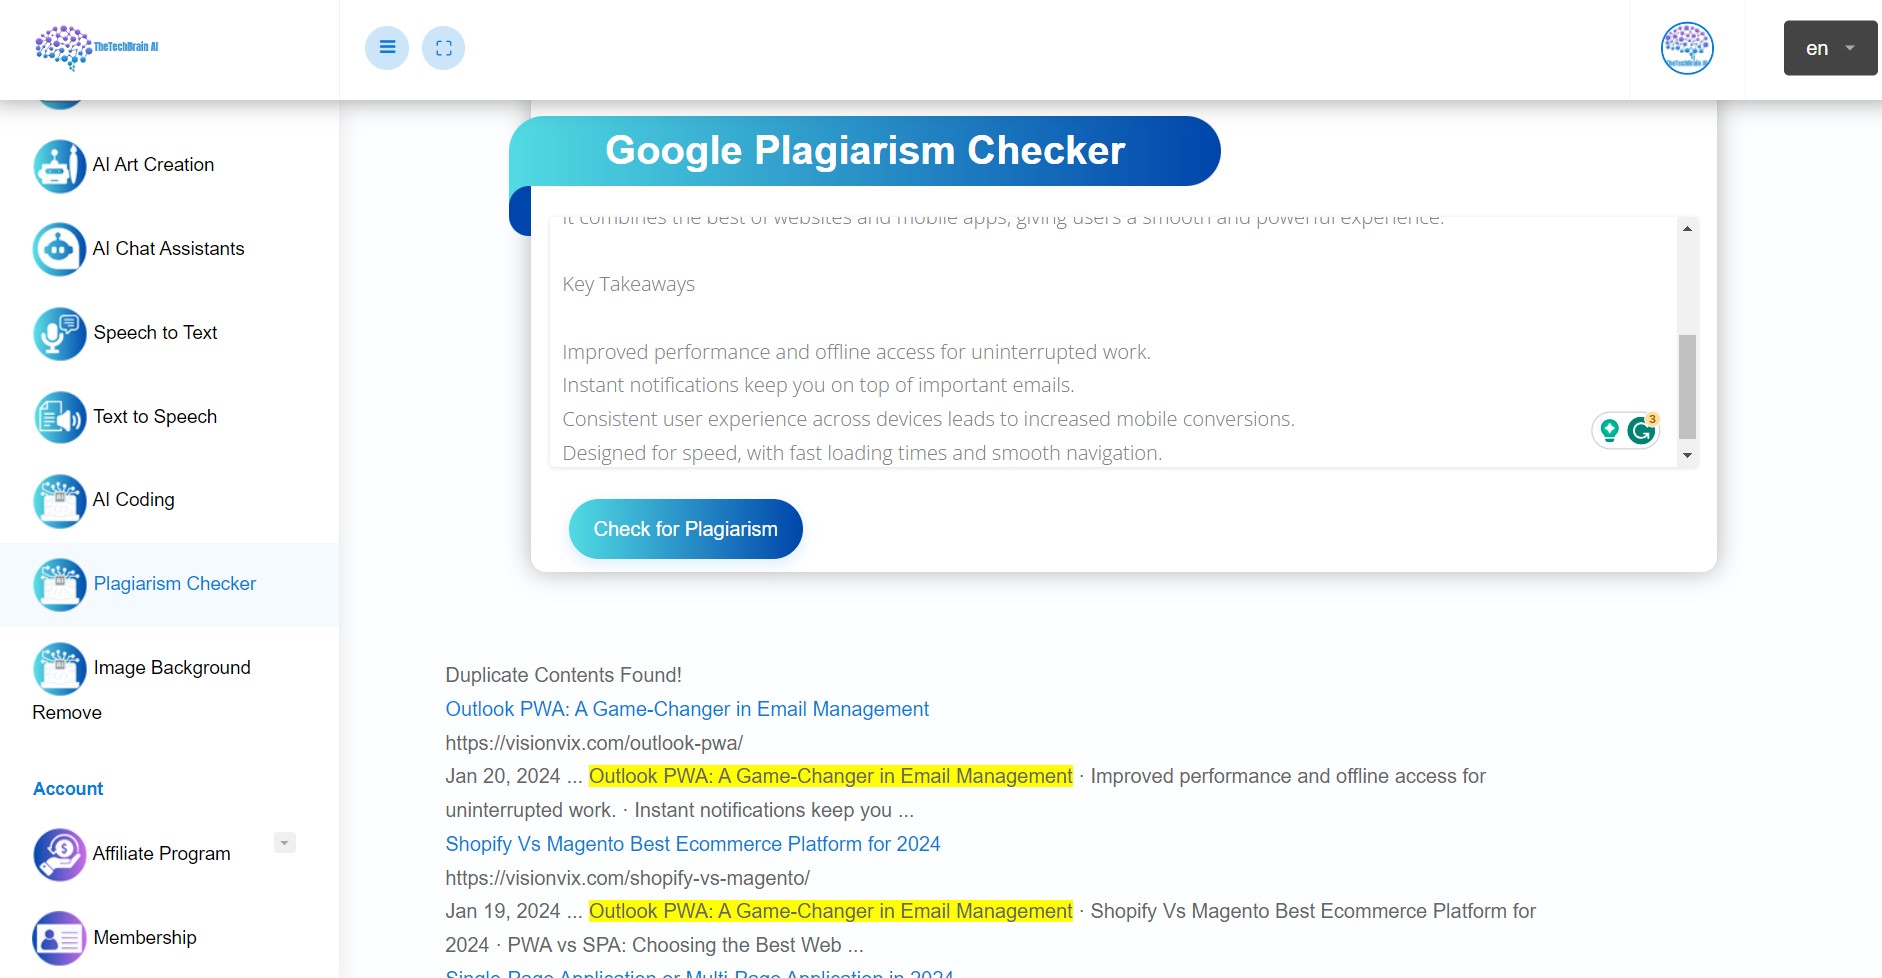 The TechBrain AI TheTechBrain Google Plagiarism Checker Tool